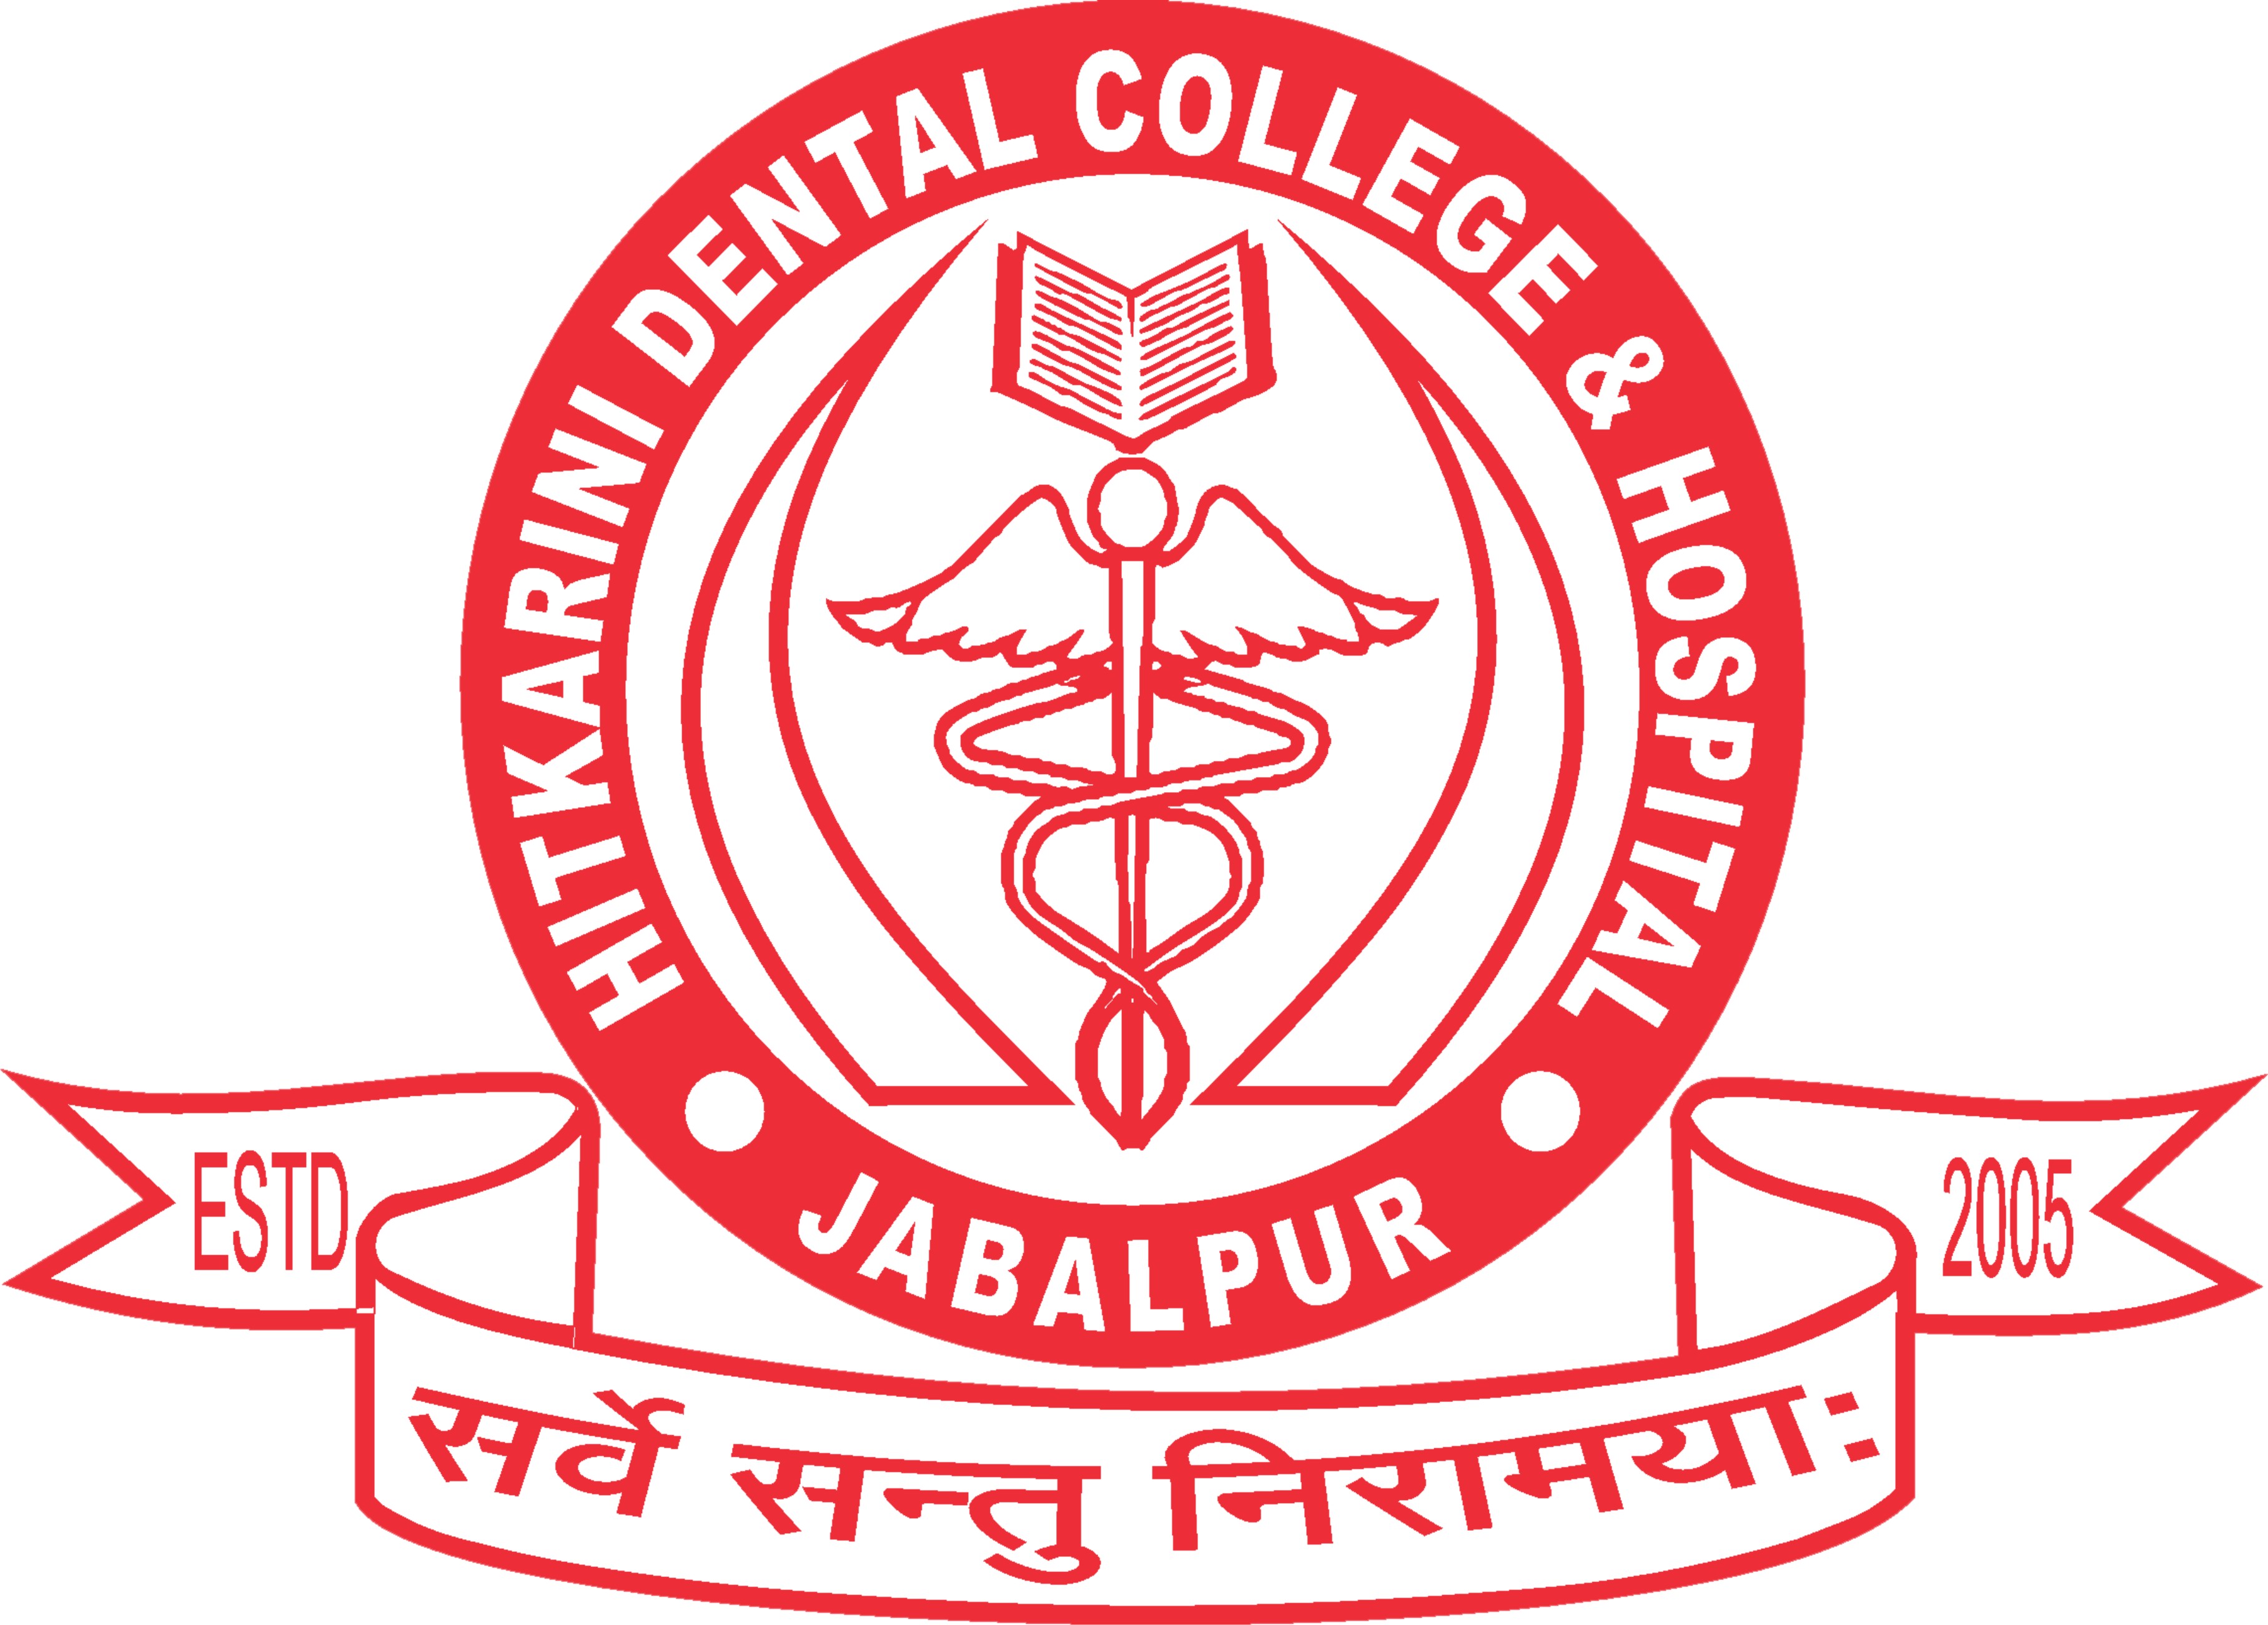 Hitkarini Dental College and Hospital